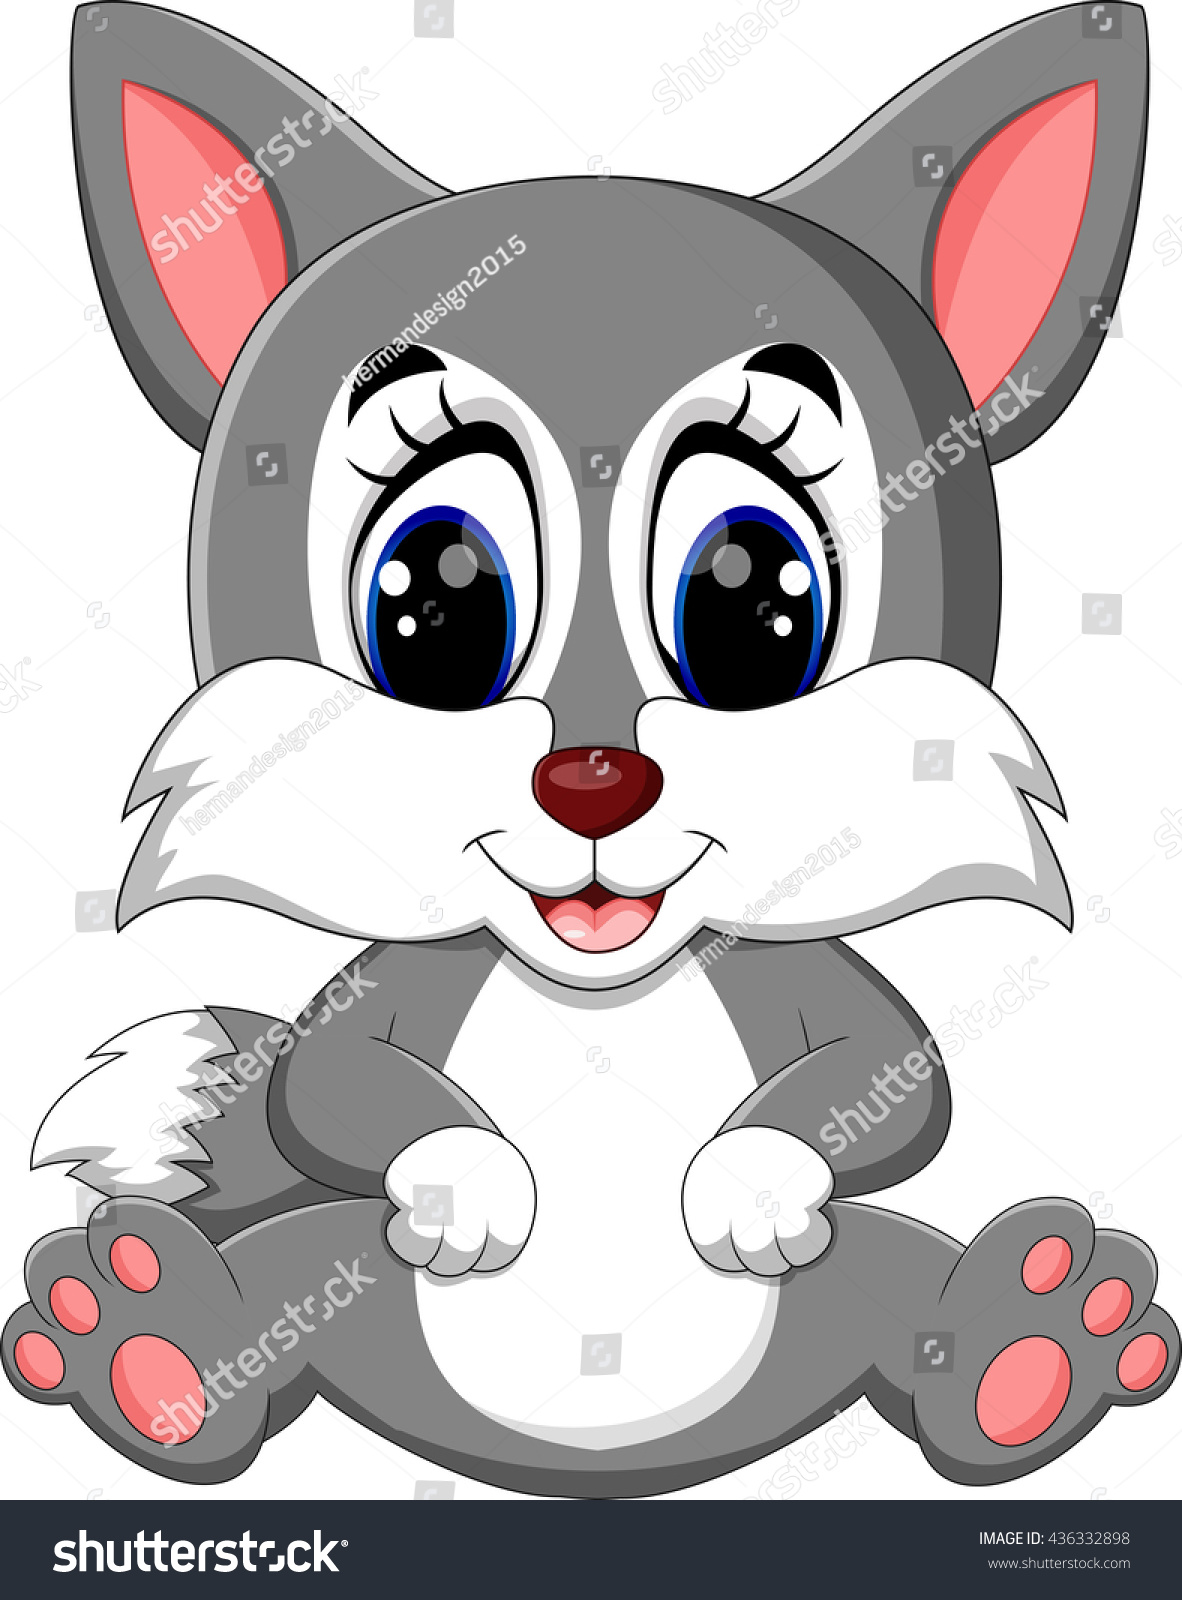 Cute Wolf Cartoon Stock Photo 436332898 : Shutterstock